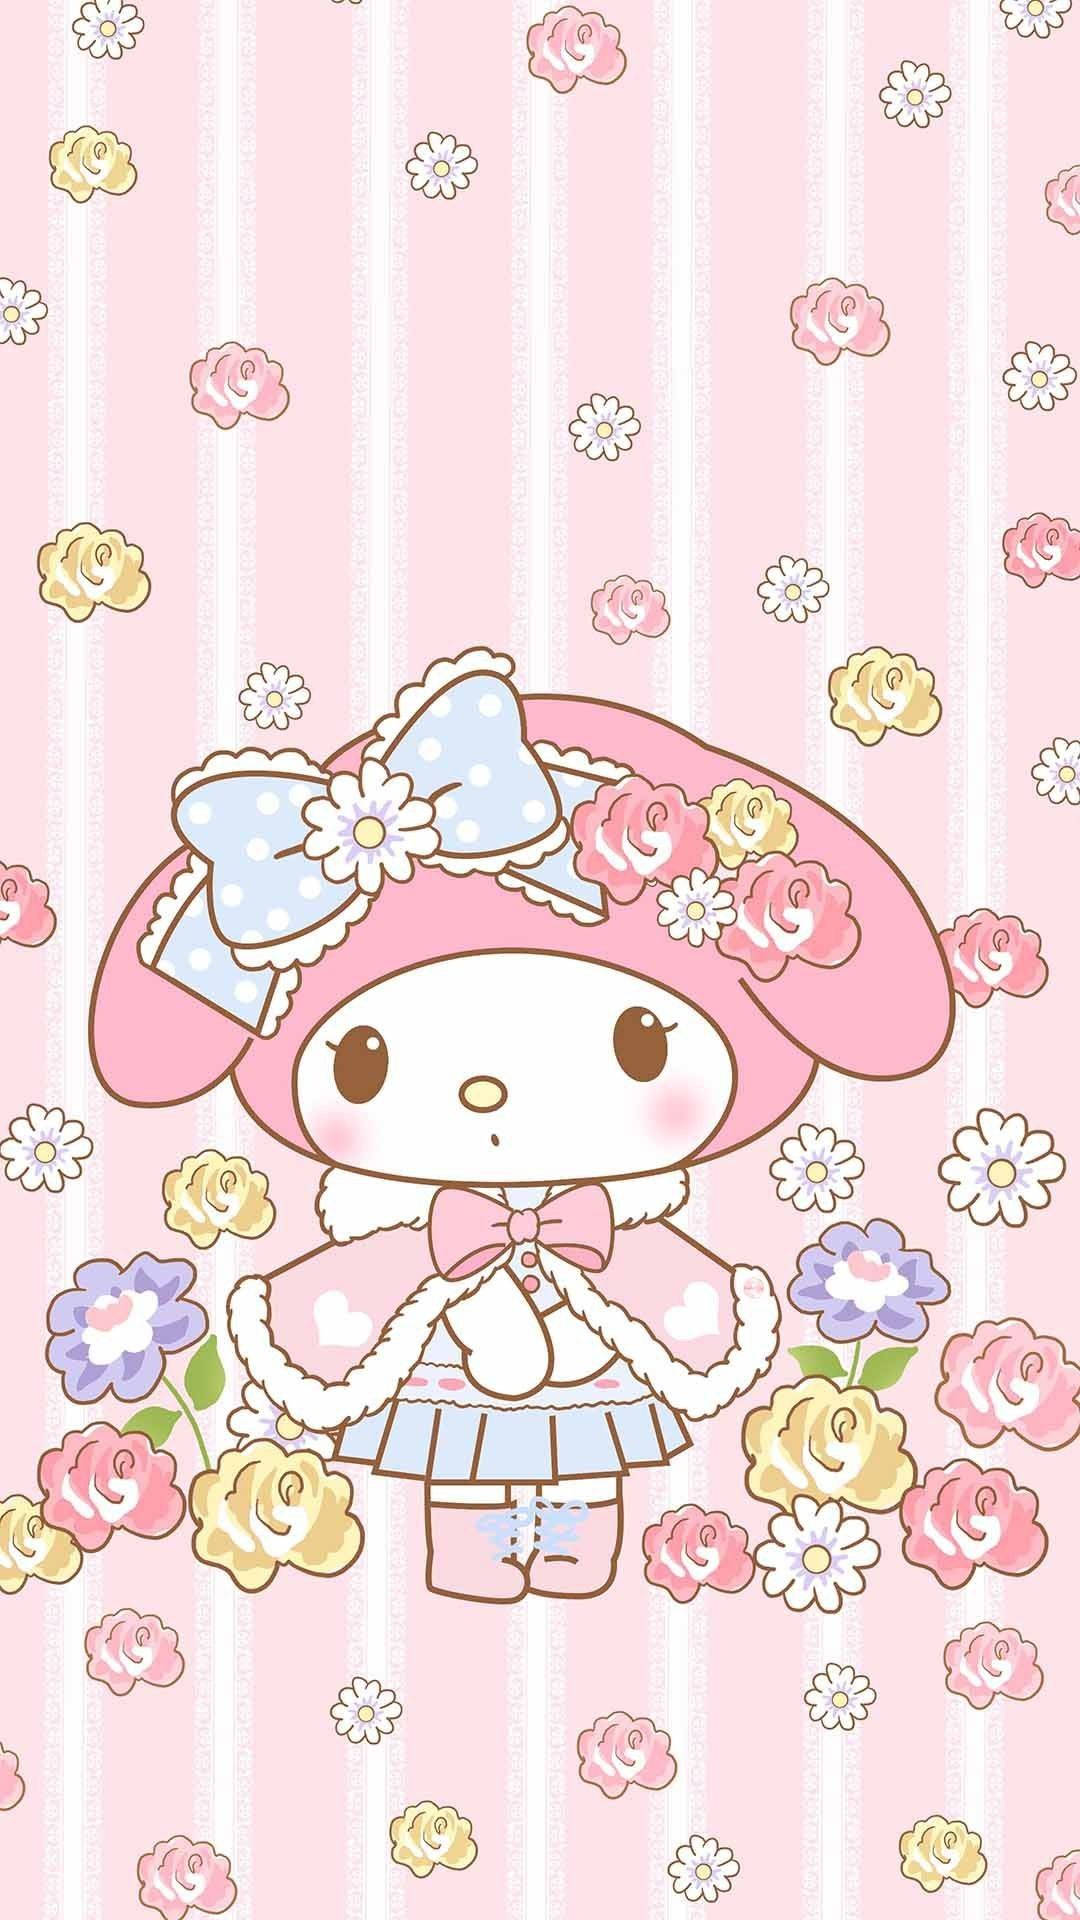 Cute Kawaii Wallpaper for ipad ! (Famous Sanrio Characters Ver.) 